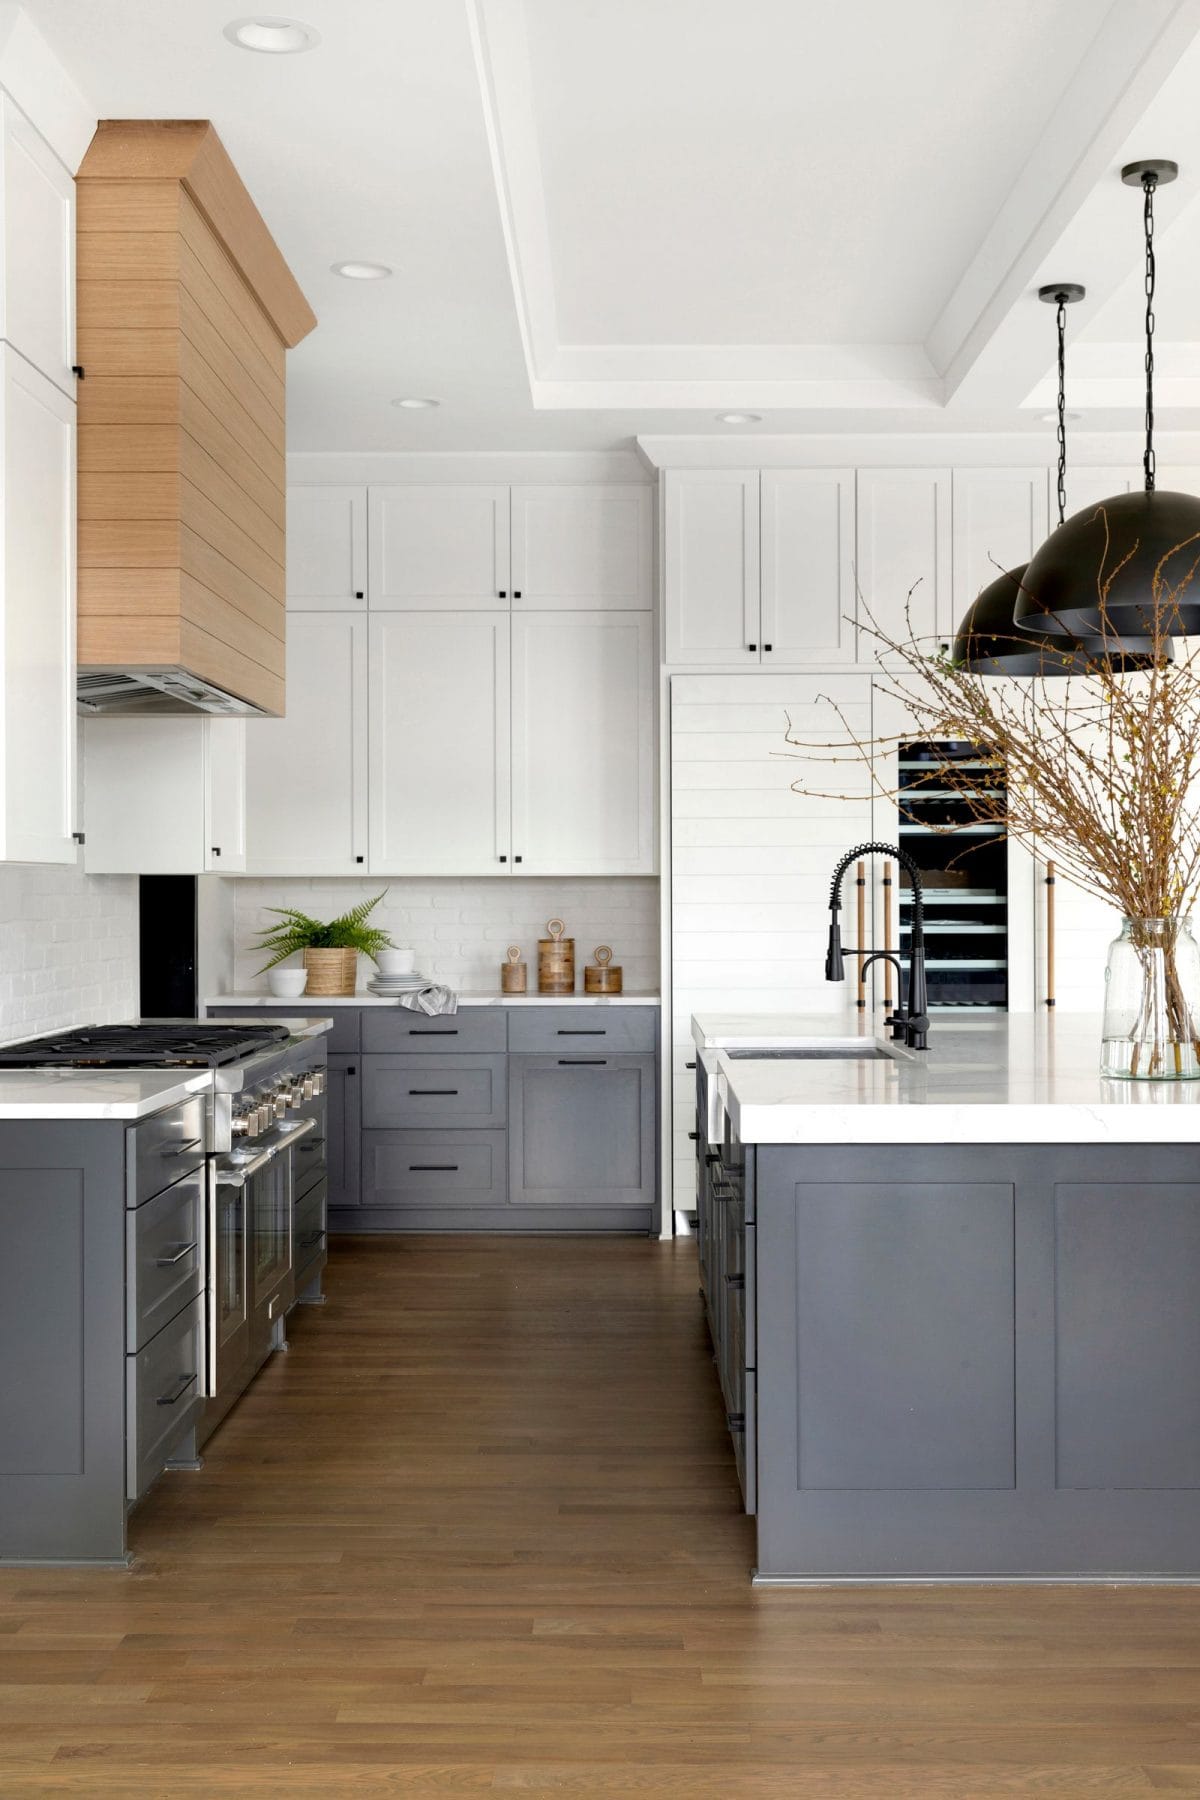 Dark grey kitchen cabinets with white upper cabinets, quartz countertops and black cabinet hardware.